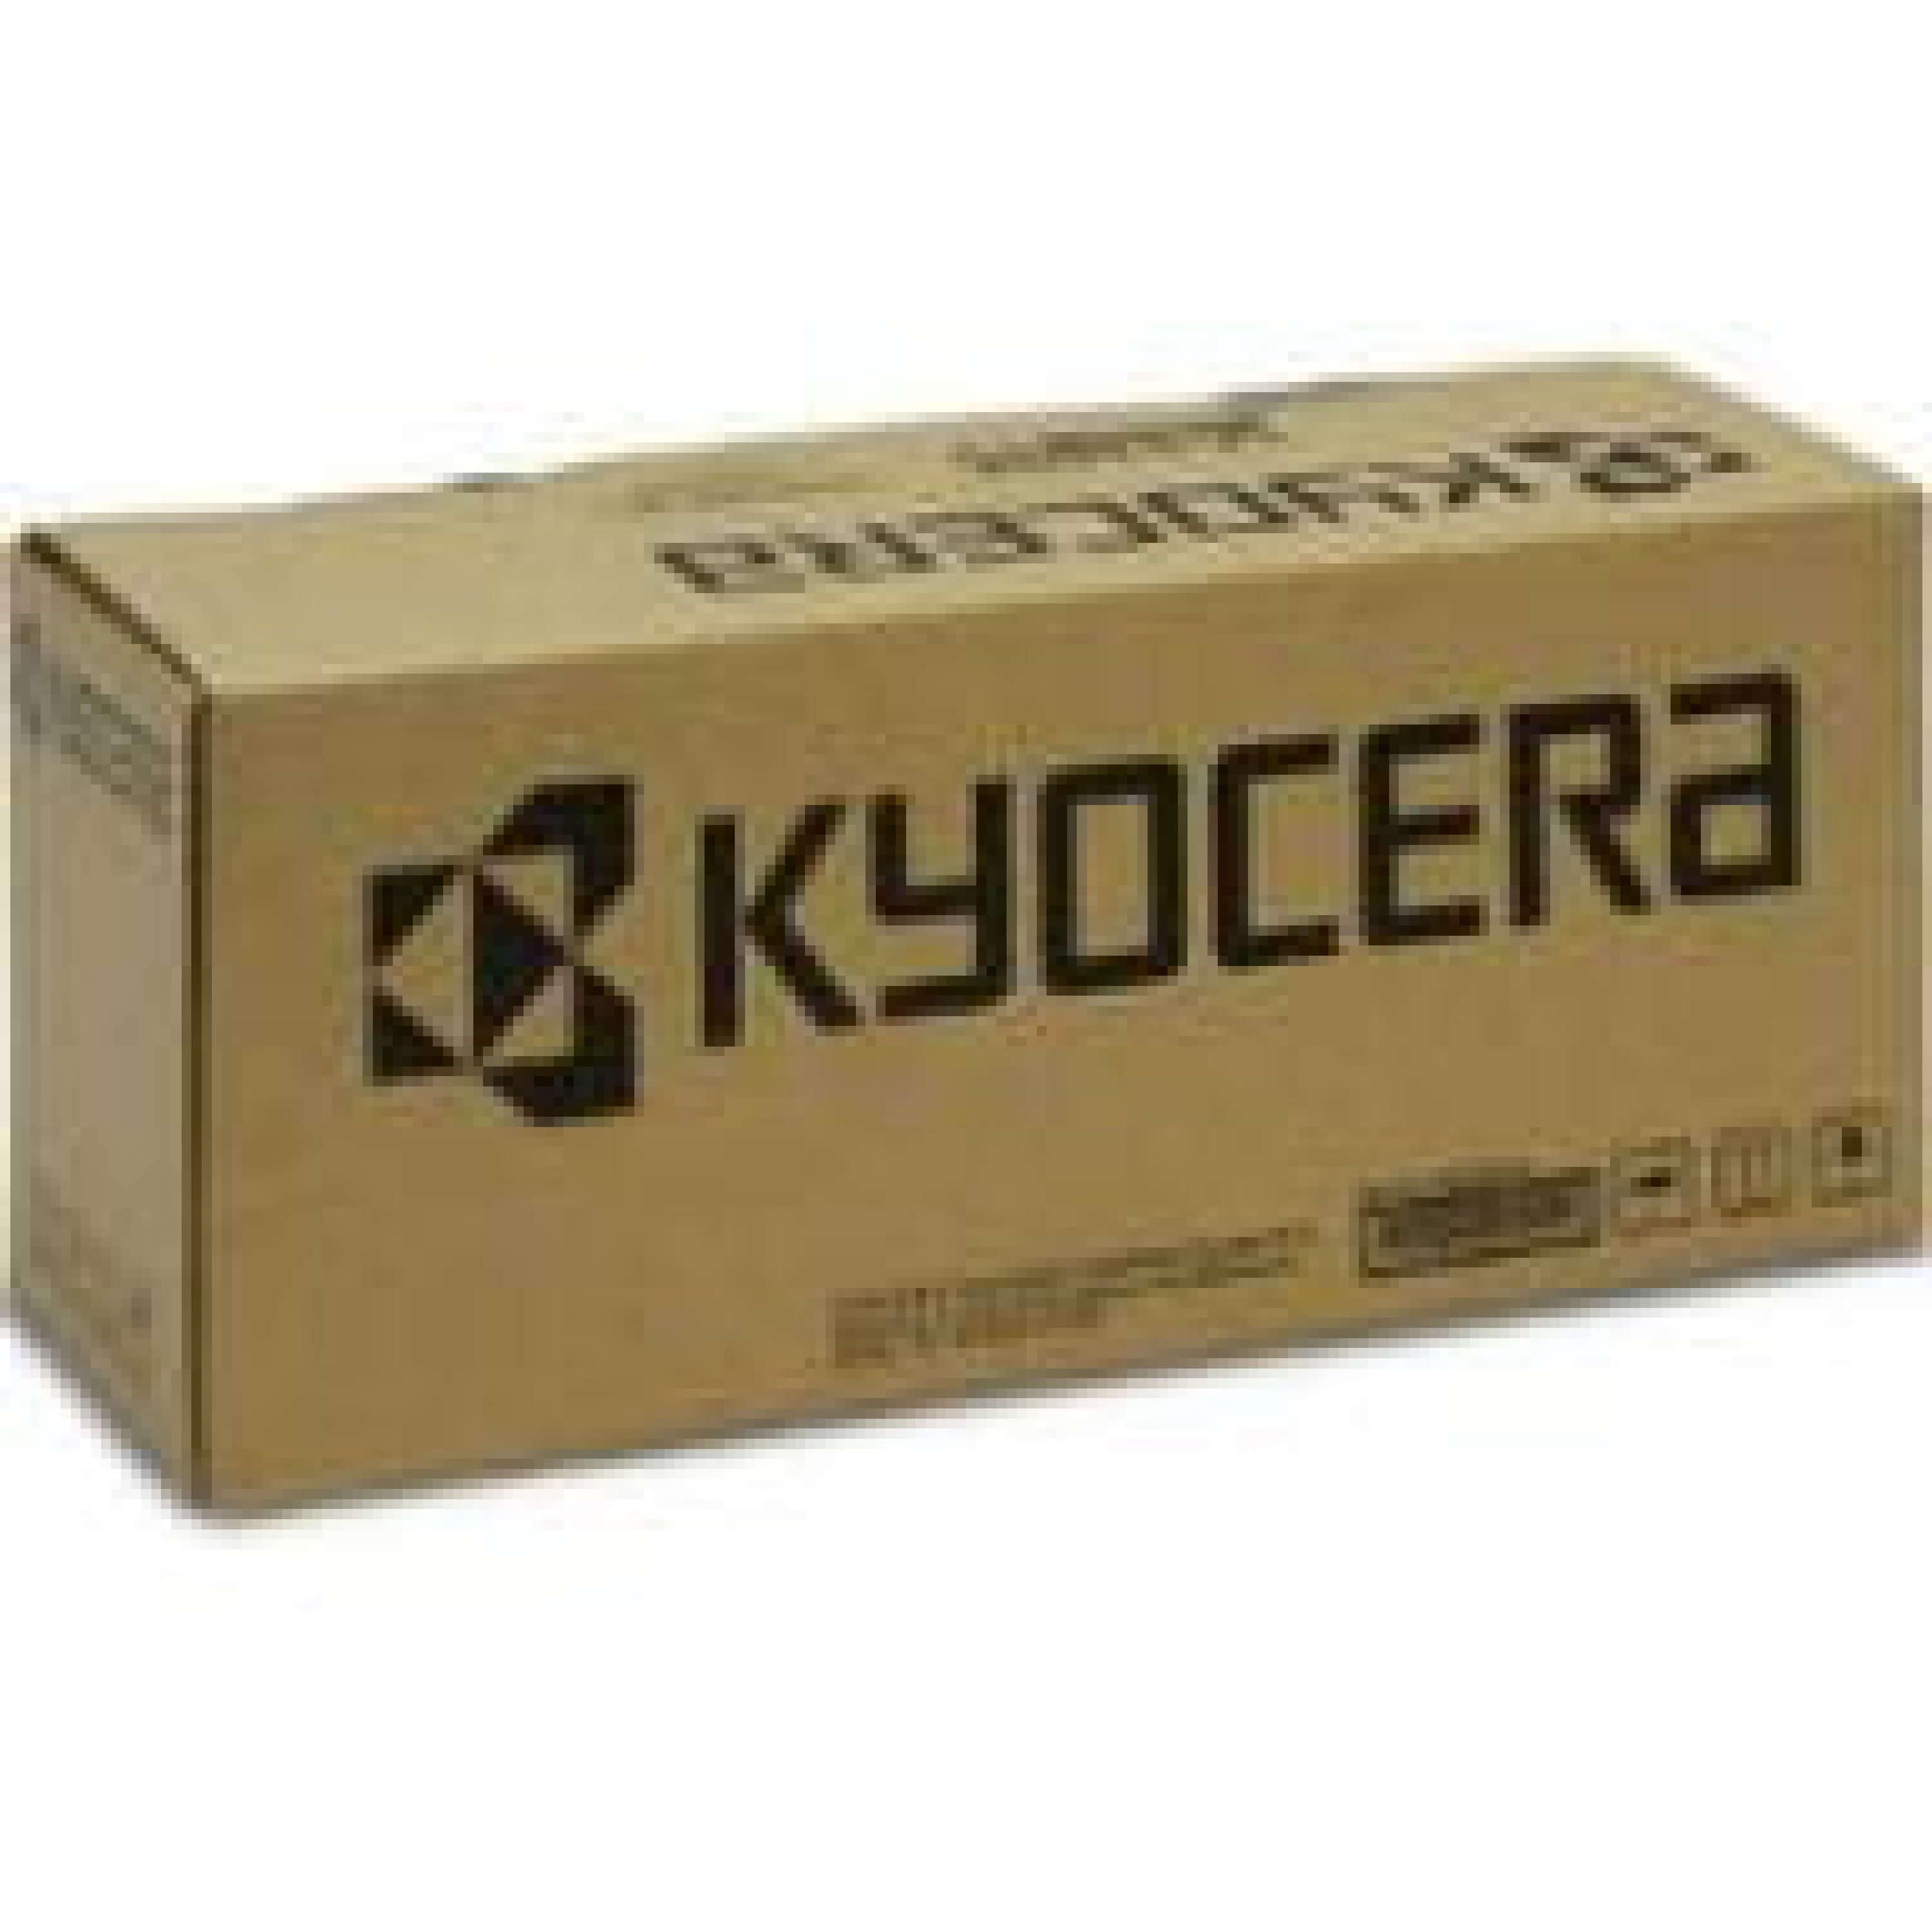 Original Toner Kyocera MA 2100 cwfx (1T0C0ACNL0 / TK-5440C)